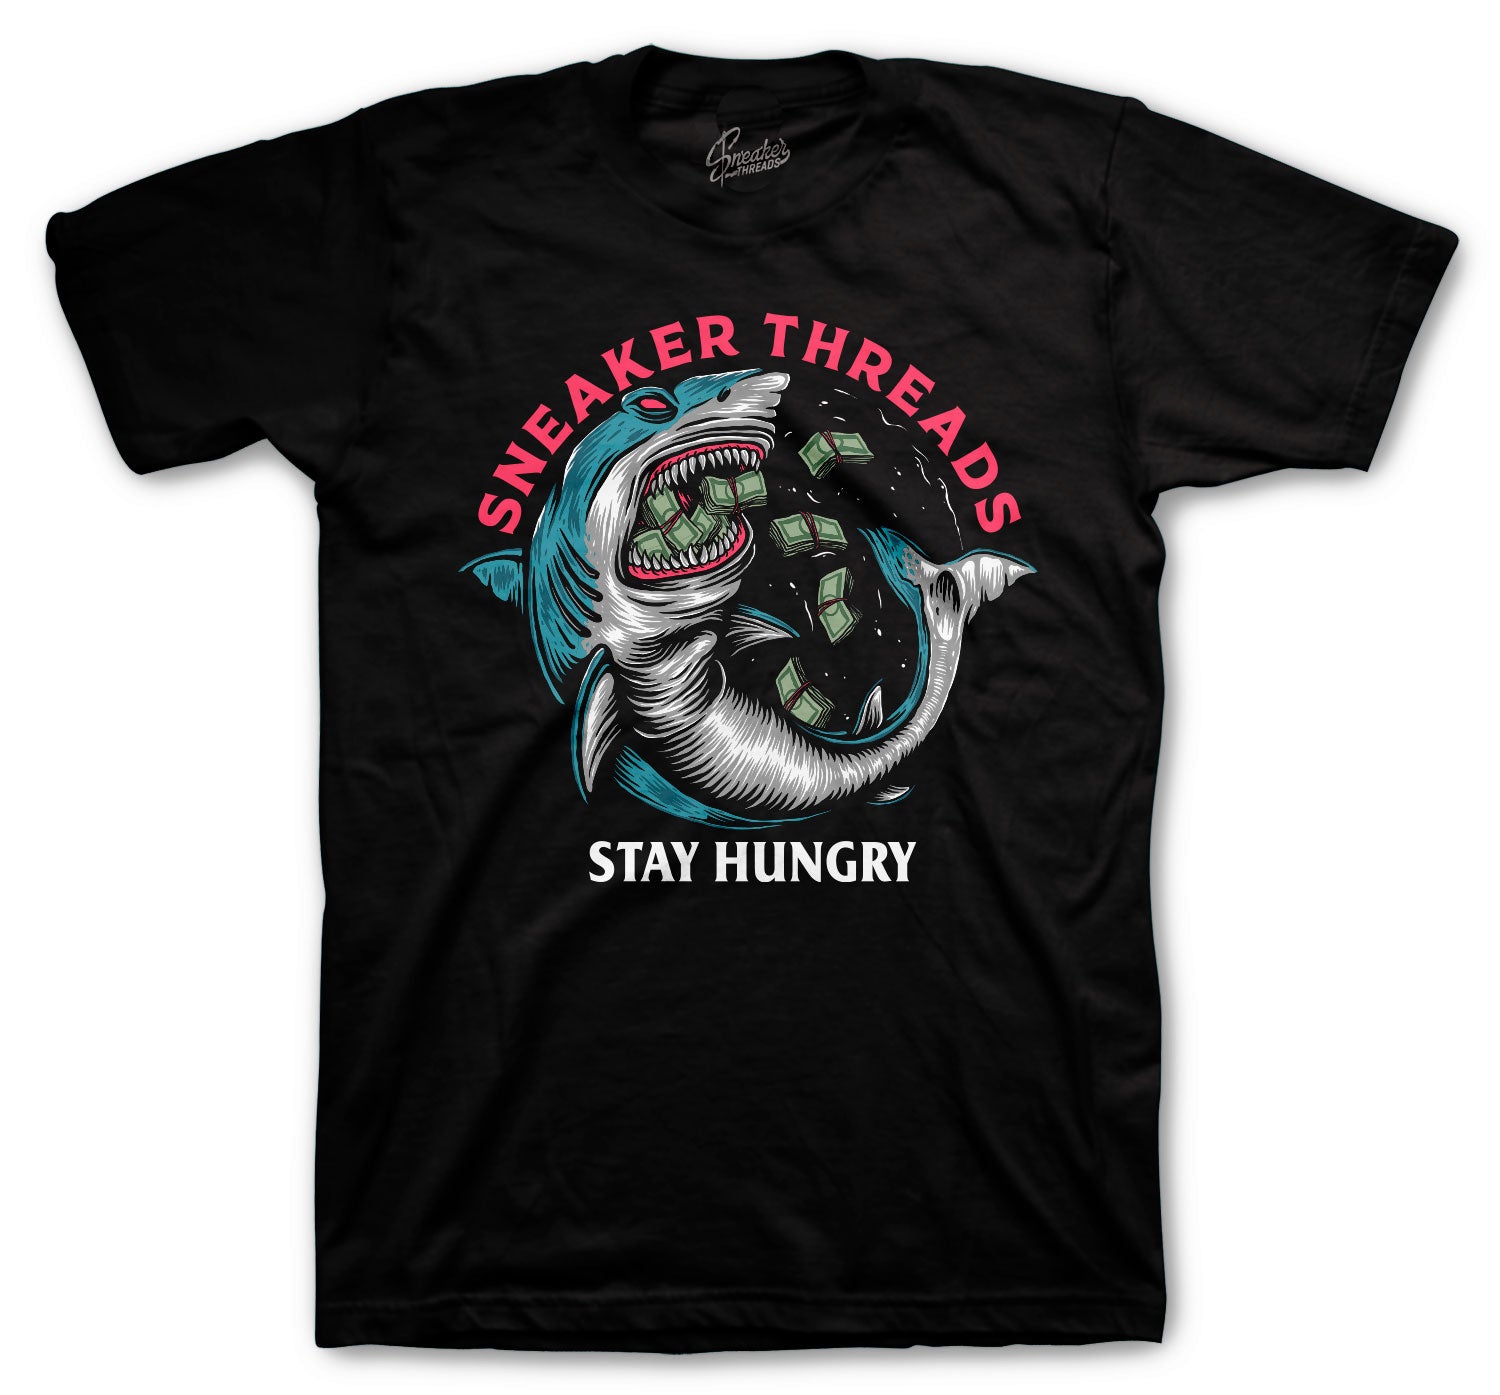 Miami Nights 8 Shirt - Stay Hungry - Black